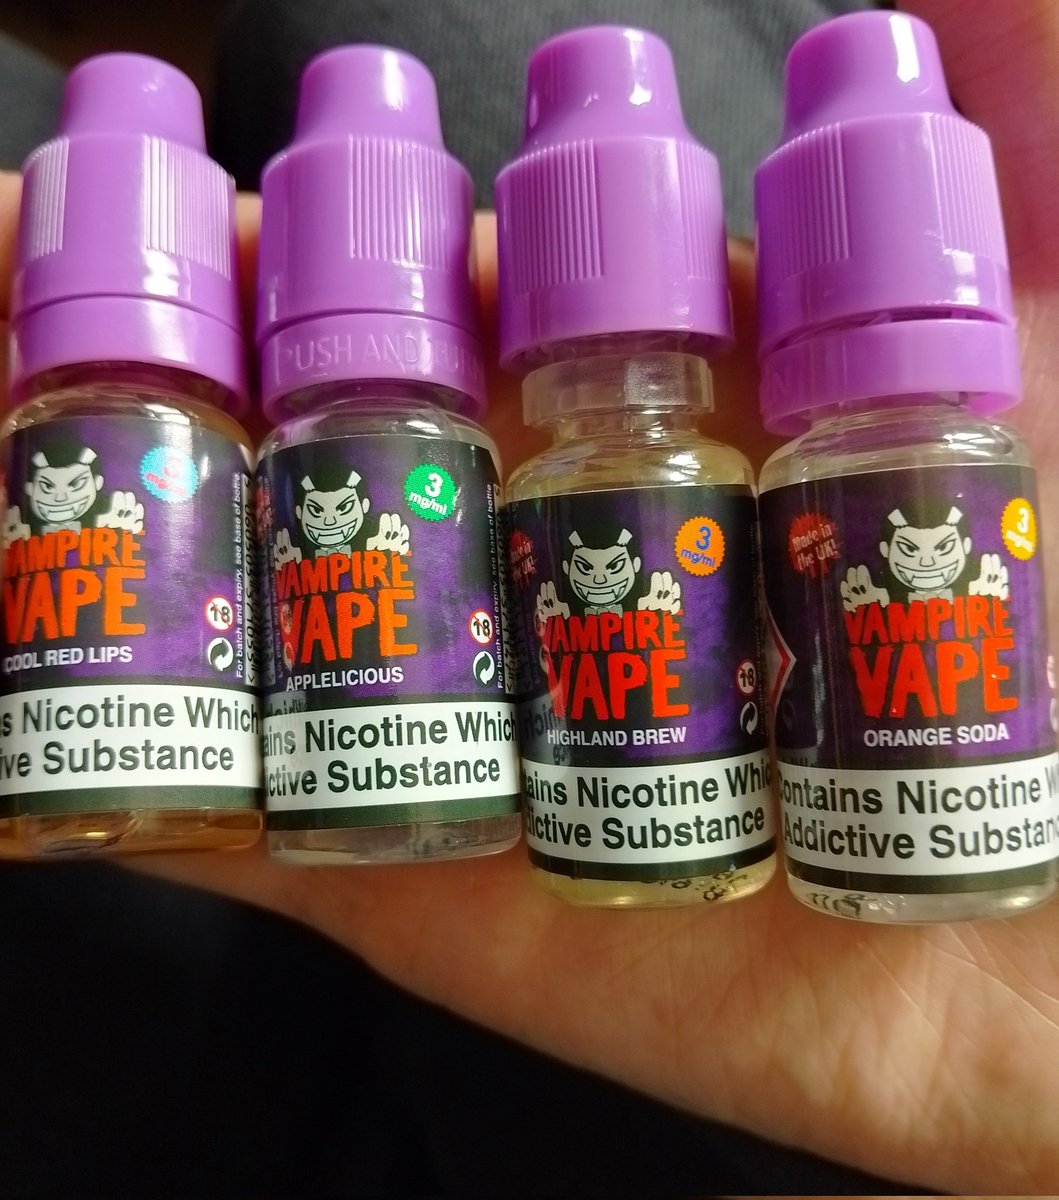 New e-liquids arrived today courtesy of @VampireVape